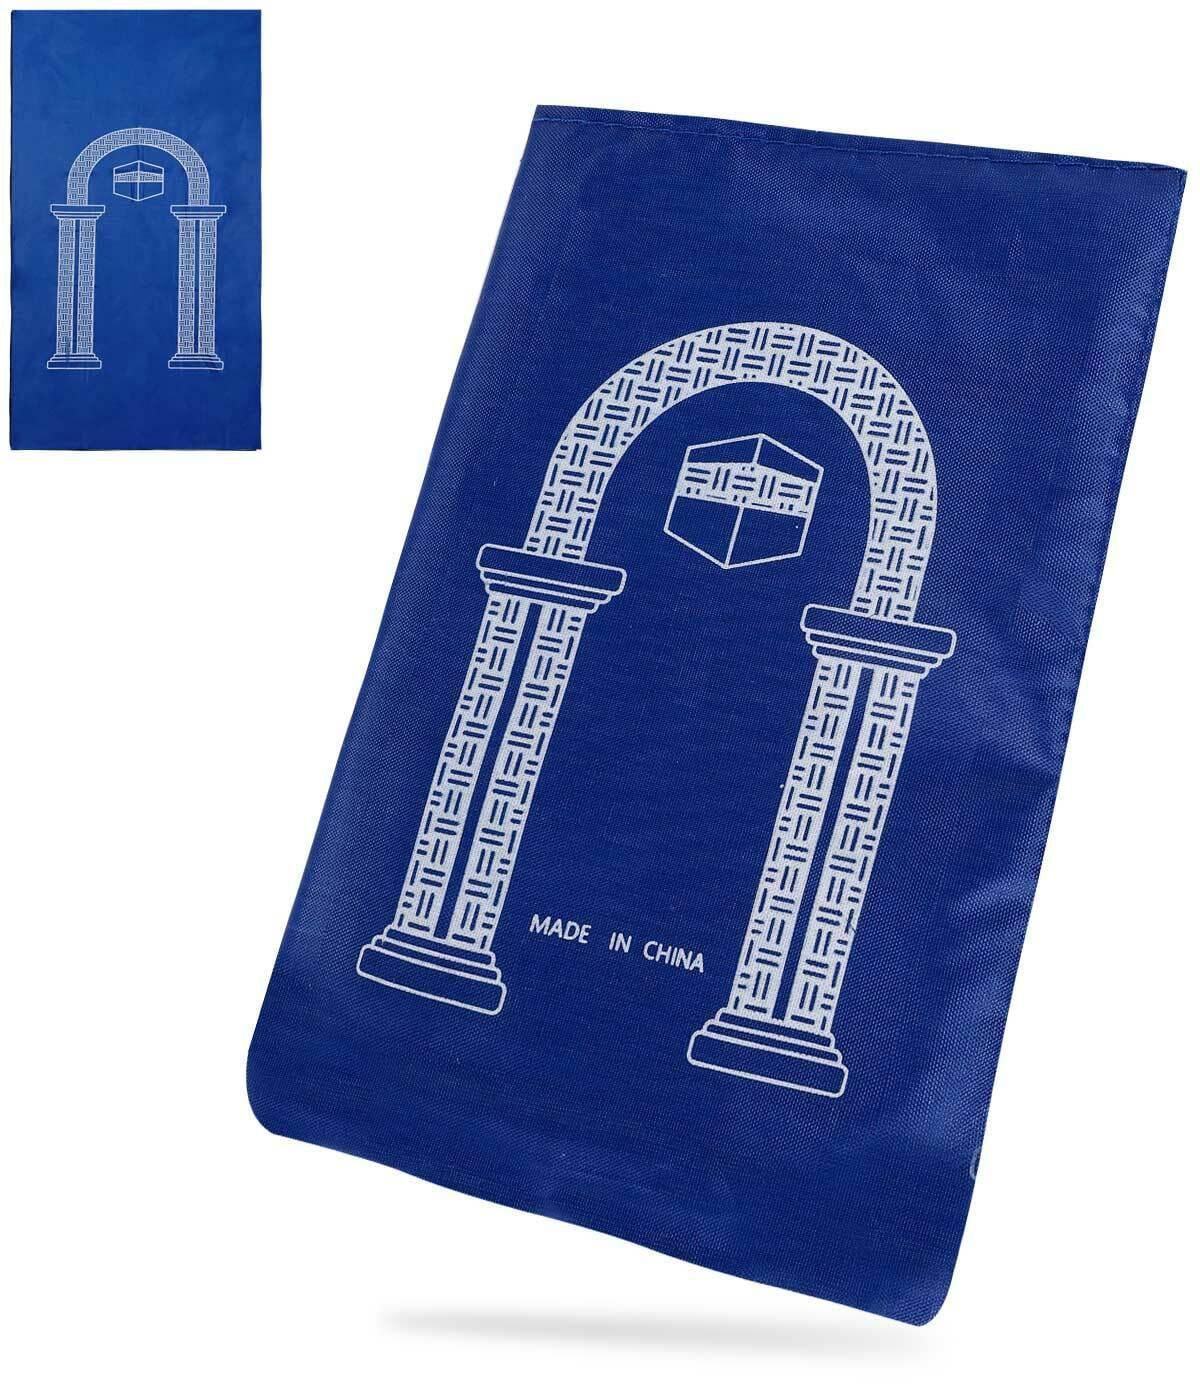 Noor Prayer Mat (Musalla) - Portable Pocket Prayer Mat For Islamic Prayer, 100 Cm X 60 Cm - Travel Friendly - Muslim/Islamic Janamaz - Travel Prayer Mat For Mosque Or Travel